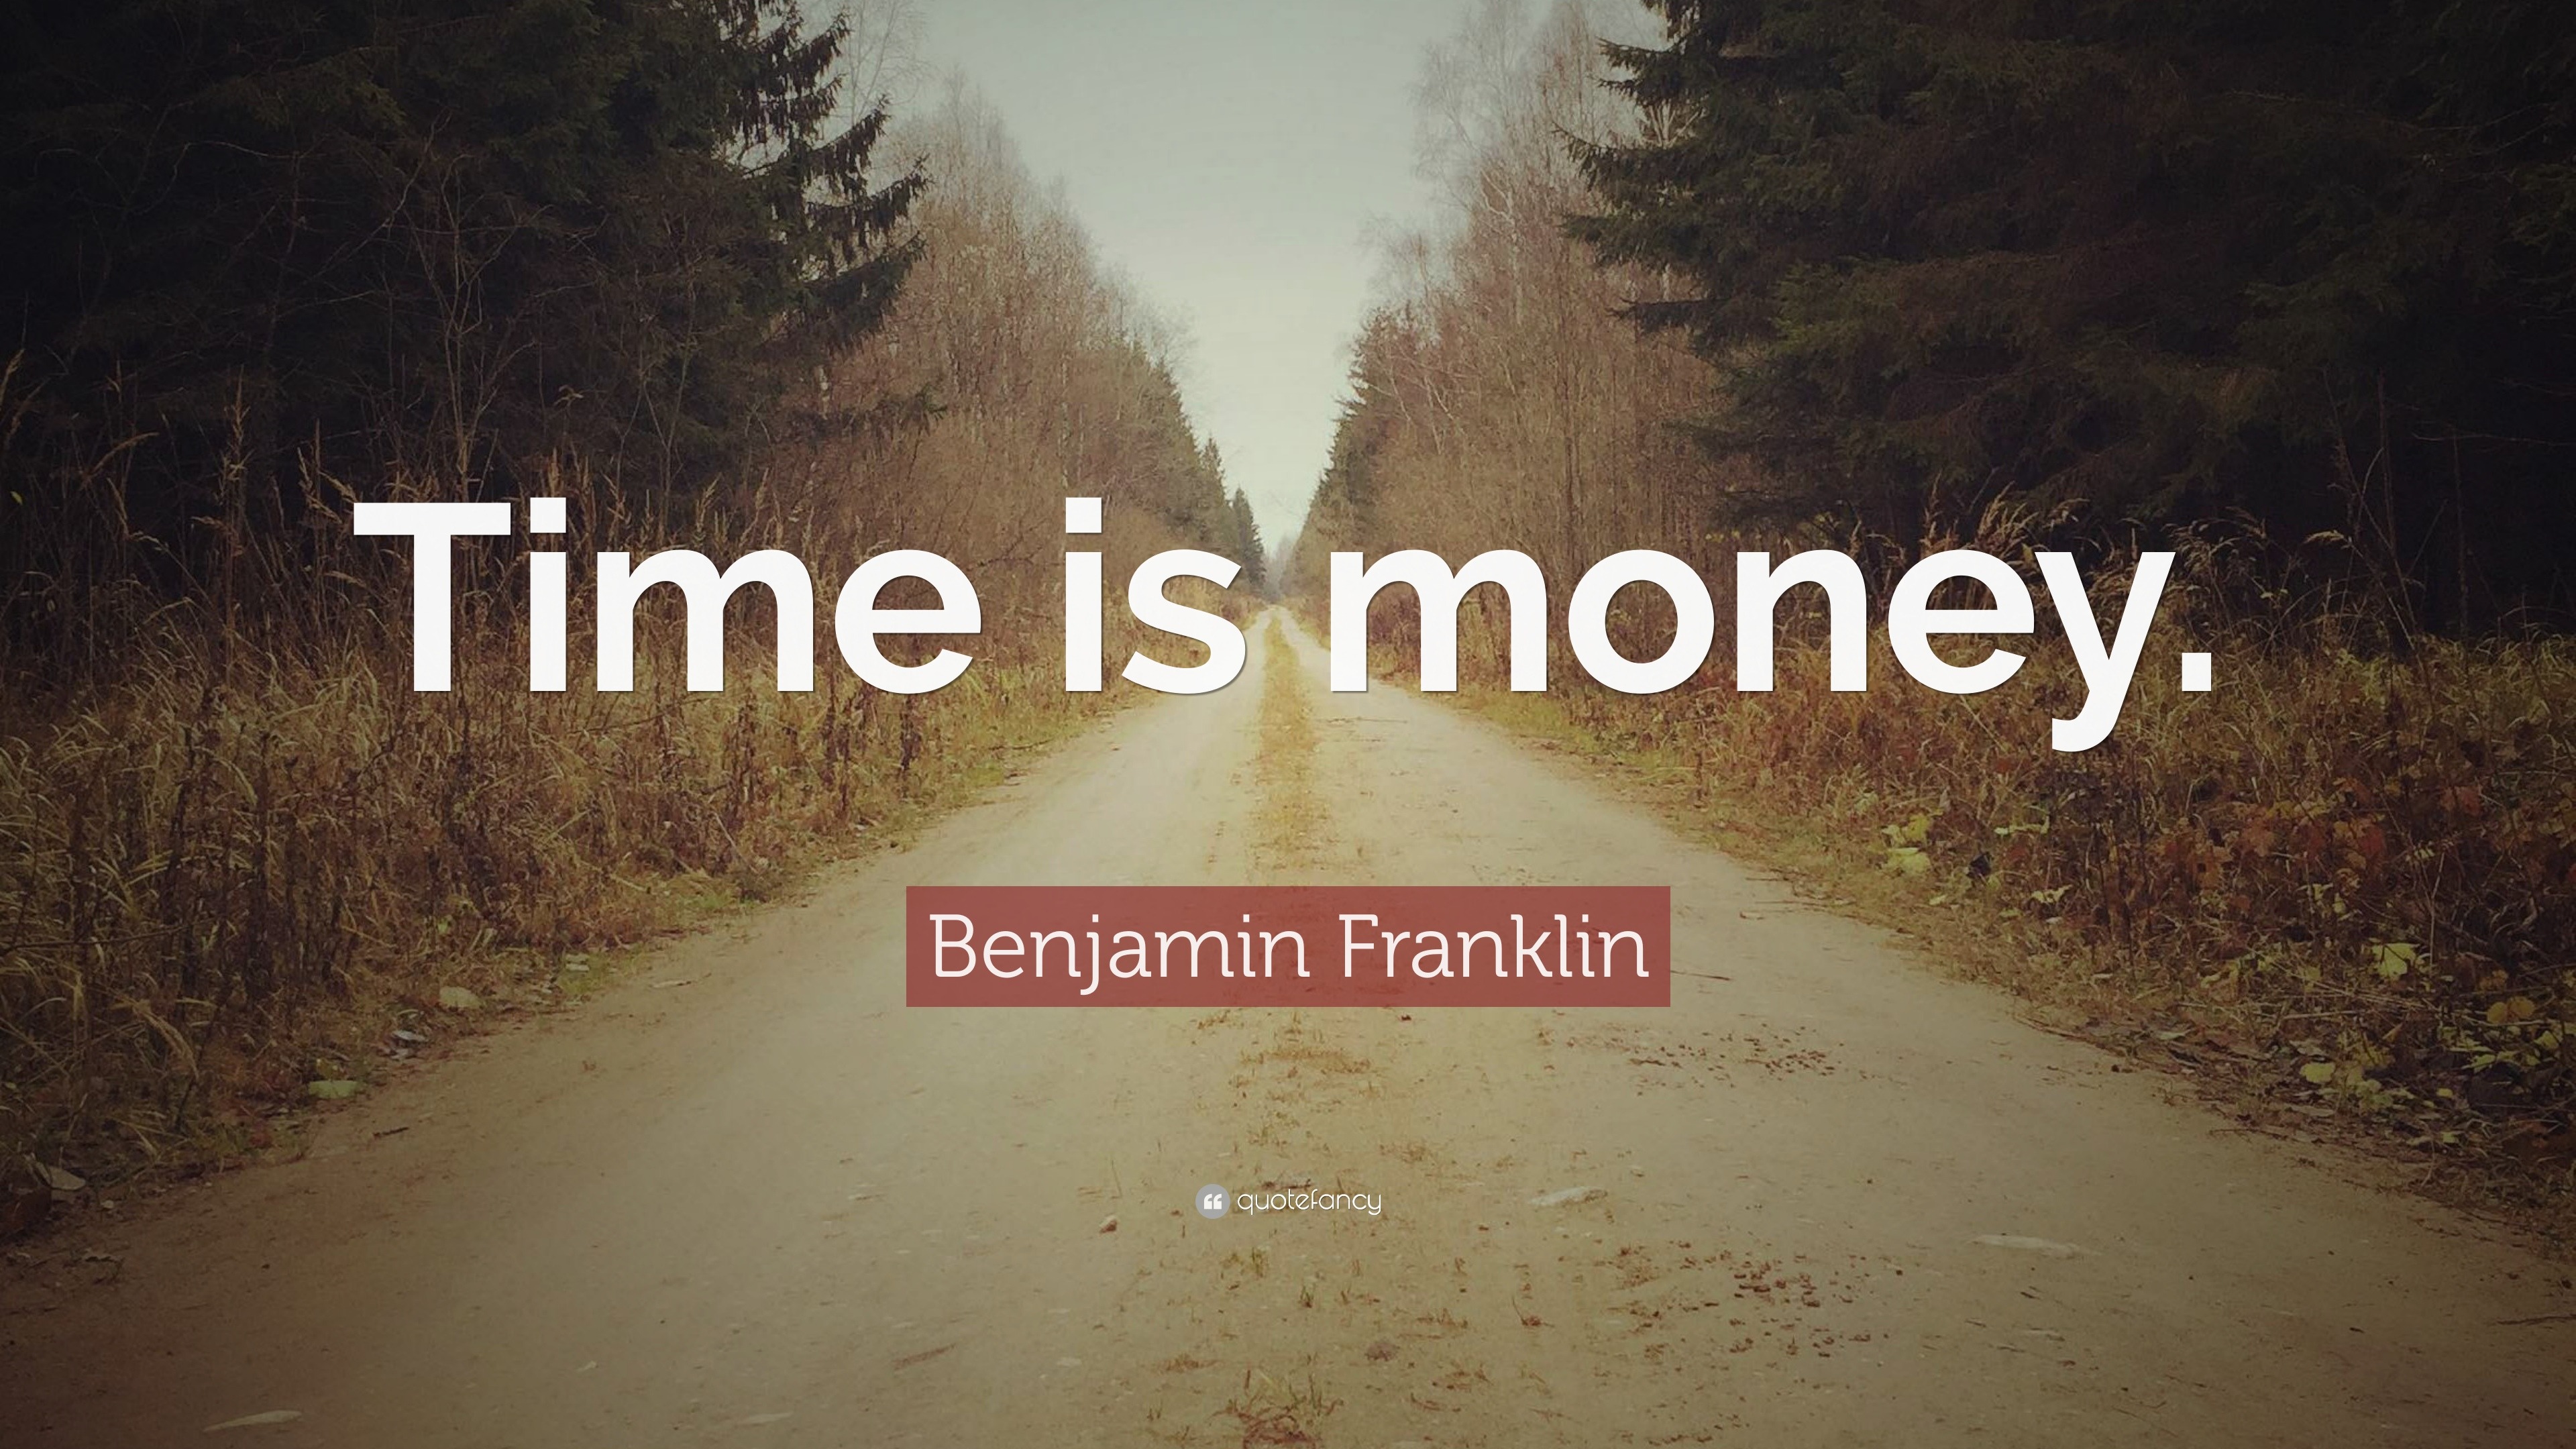 Benjamin Franklin Quote: "Time is money."